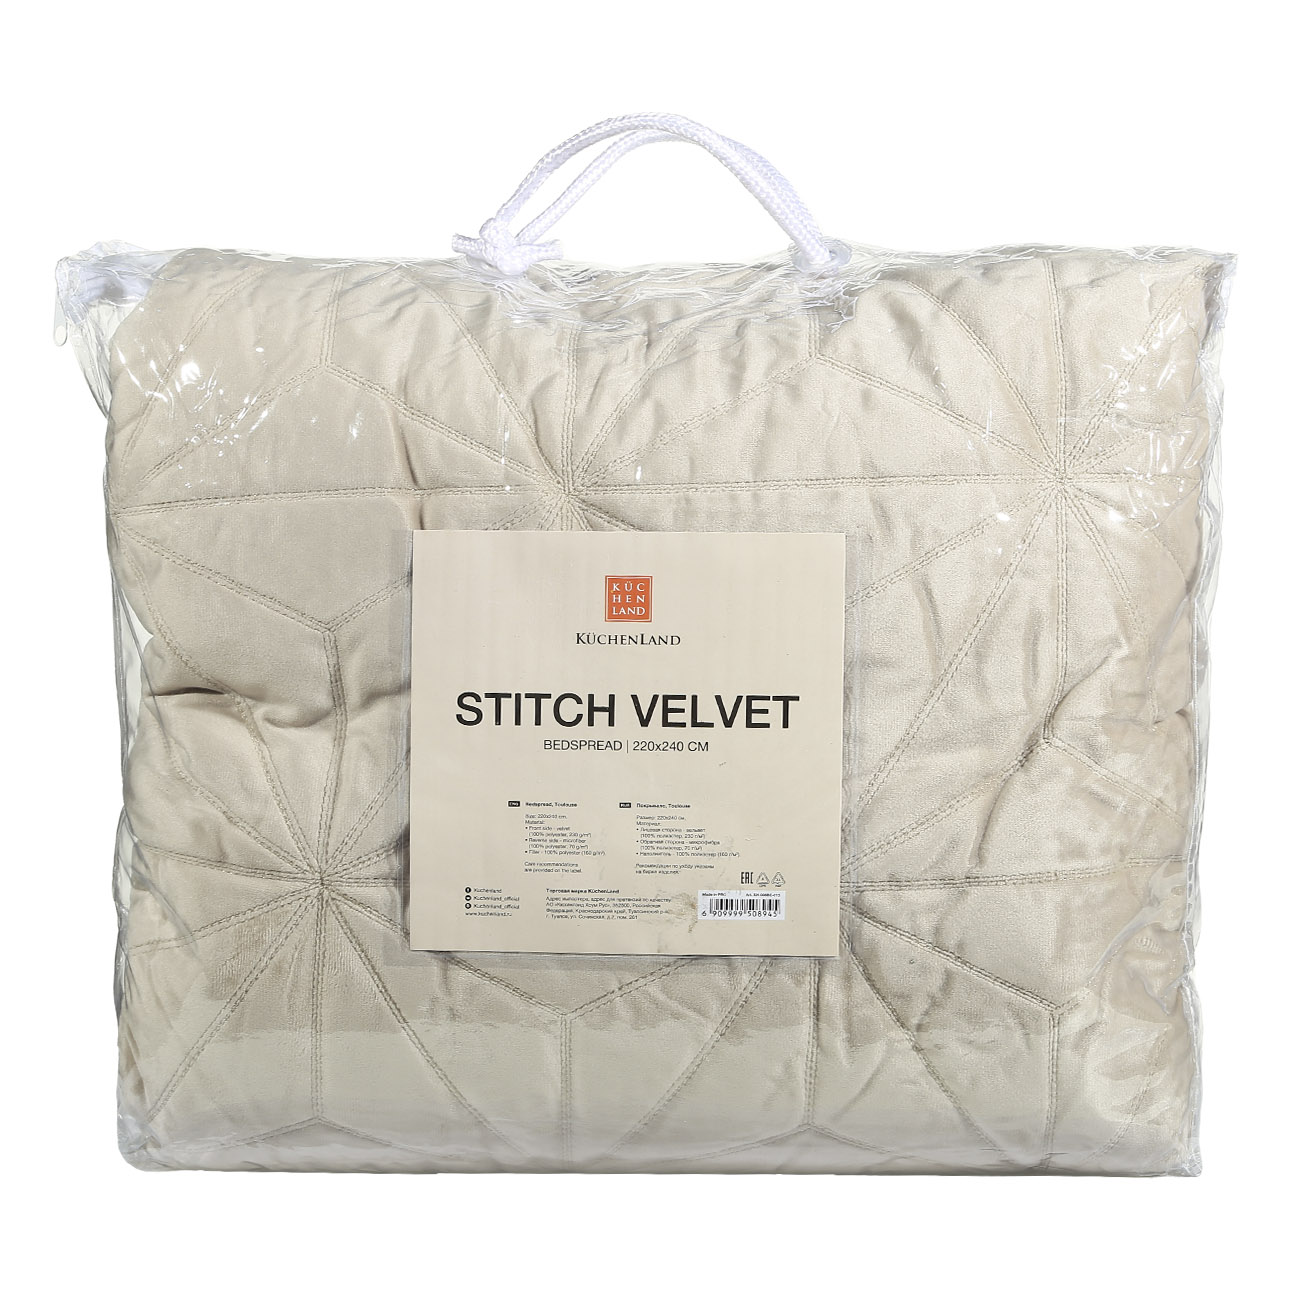 Bedspread, 220x240 cm, quilted, corduroy/microfiber, beige, Toulouse, Stitch velvet изображение № 2